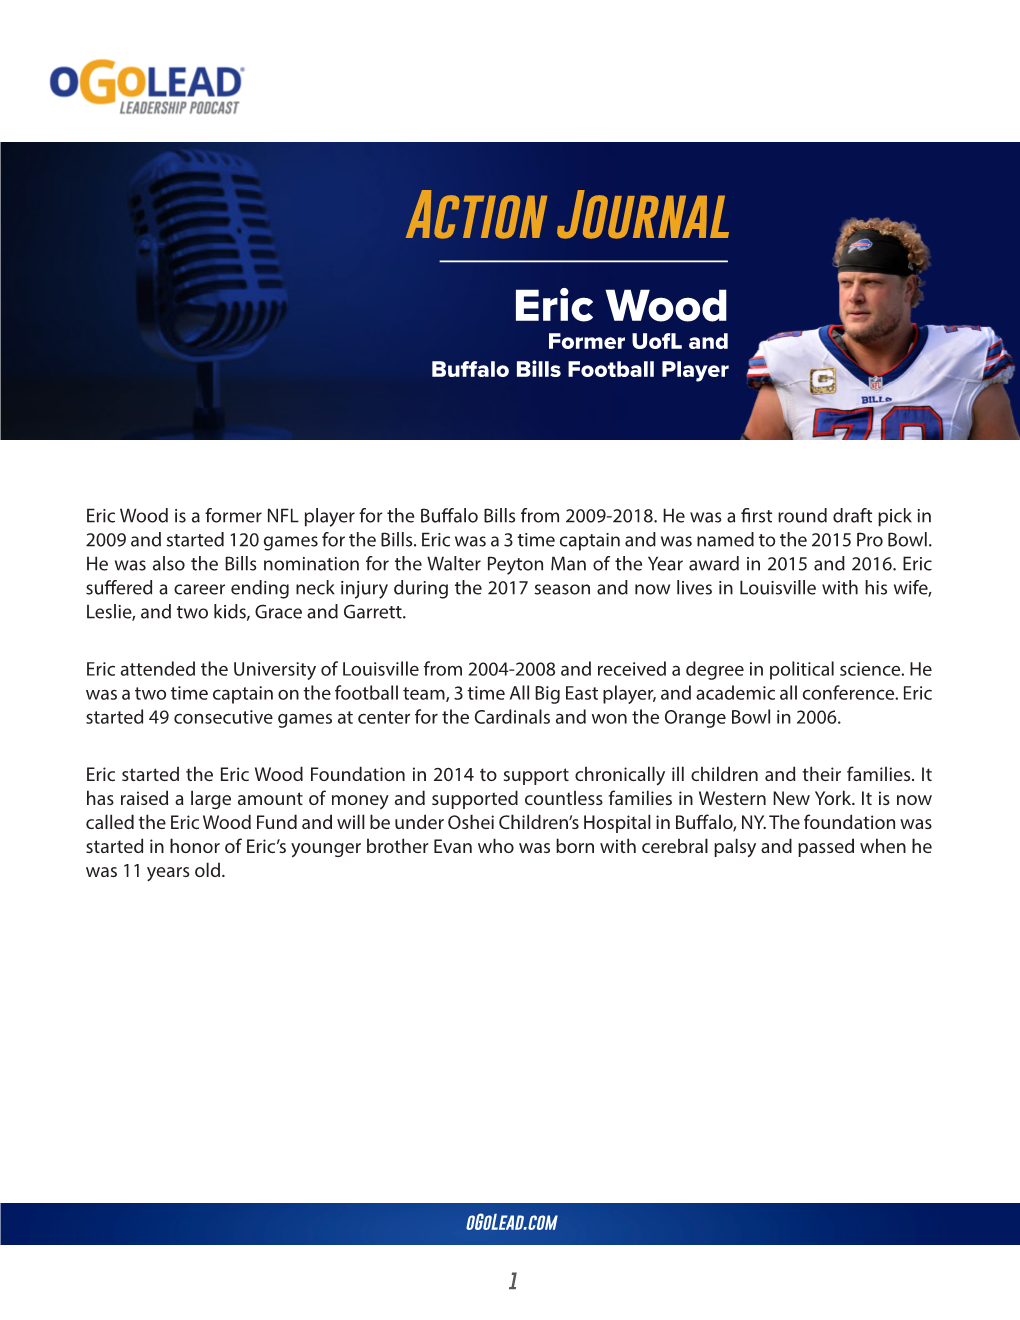 Action Journal Eric Wood Former Uofl and Buffalo Bills Football Player